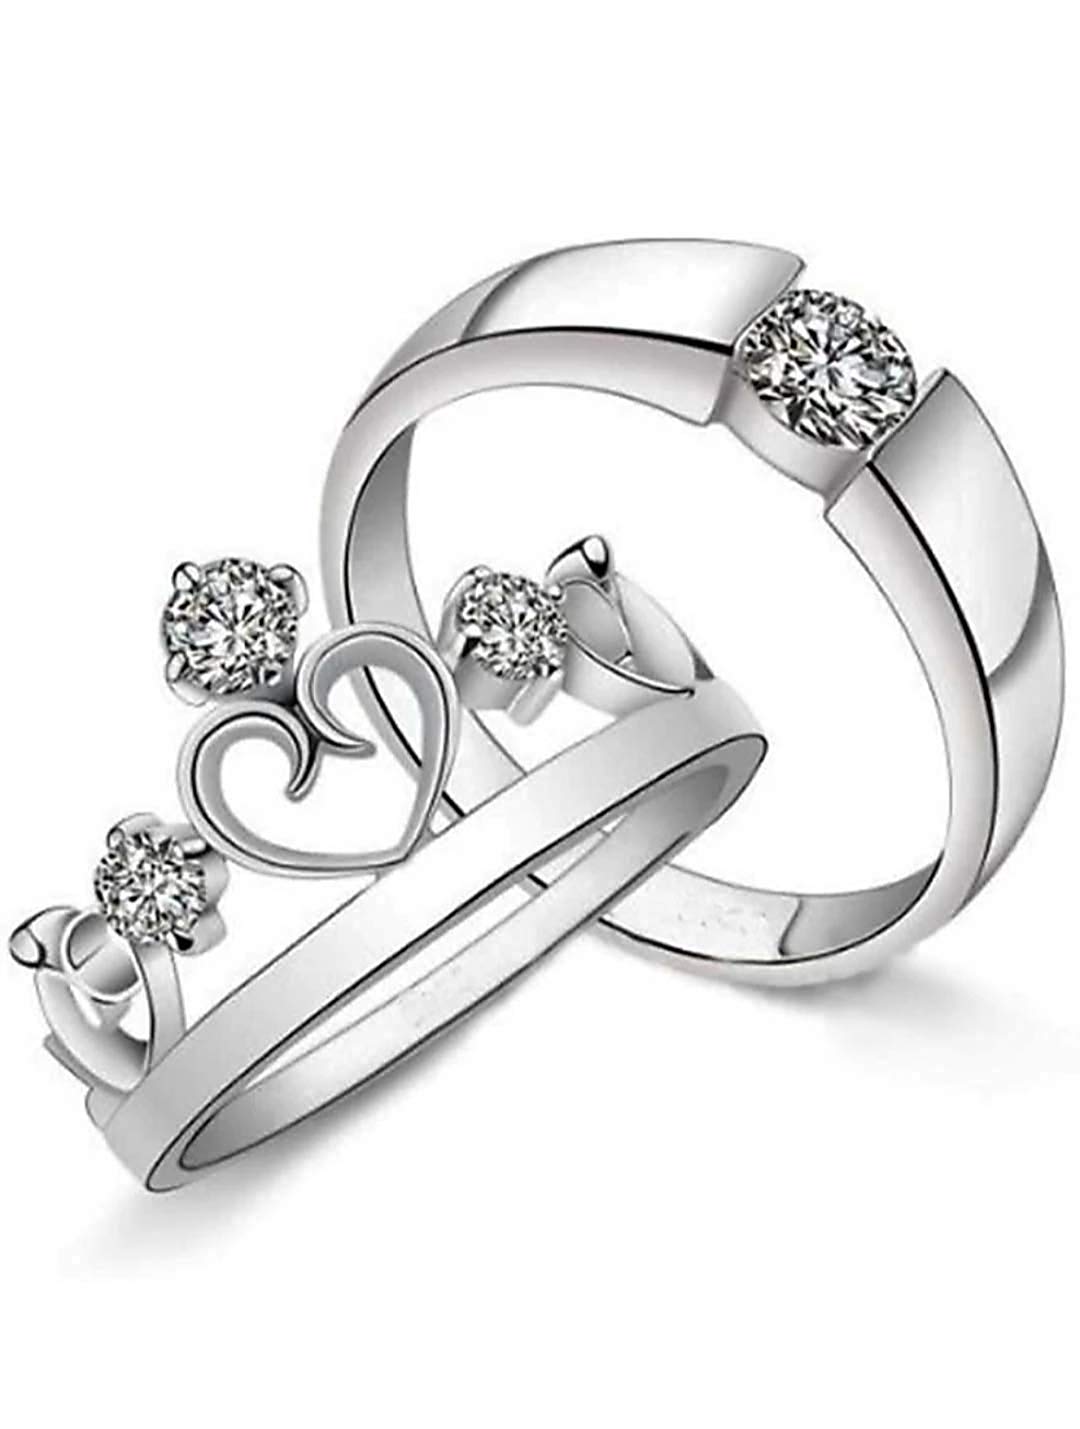 Matching Gifts Boyfriend Girlfriend | Luminous Ring Glowing Dark Couple  Rings - Rings - Aliexpress